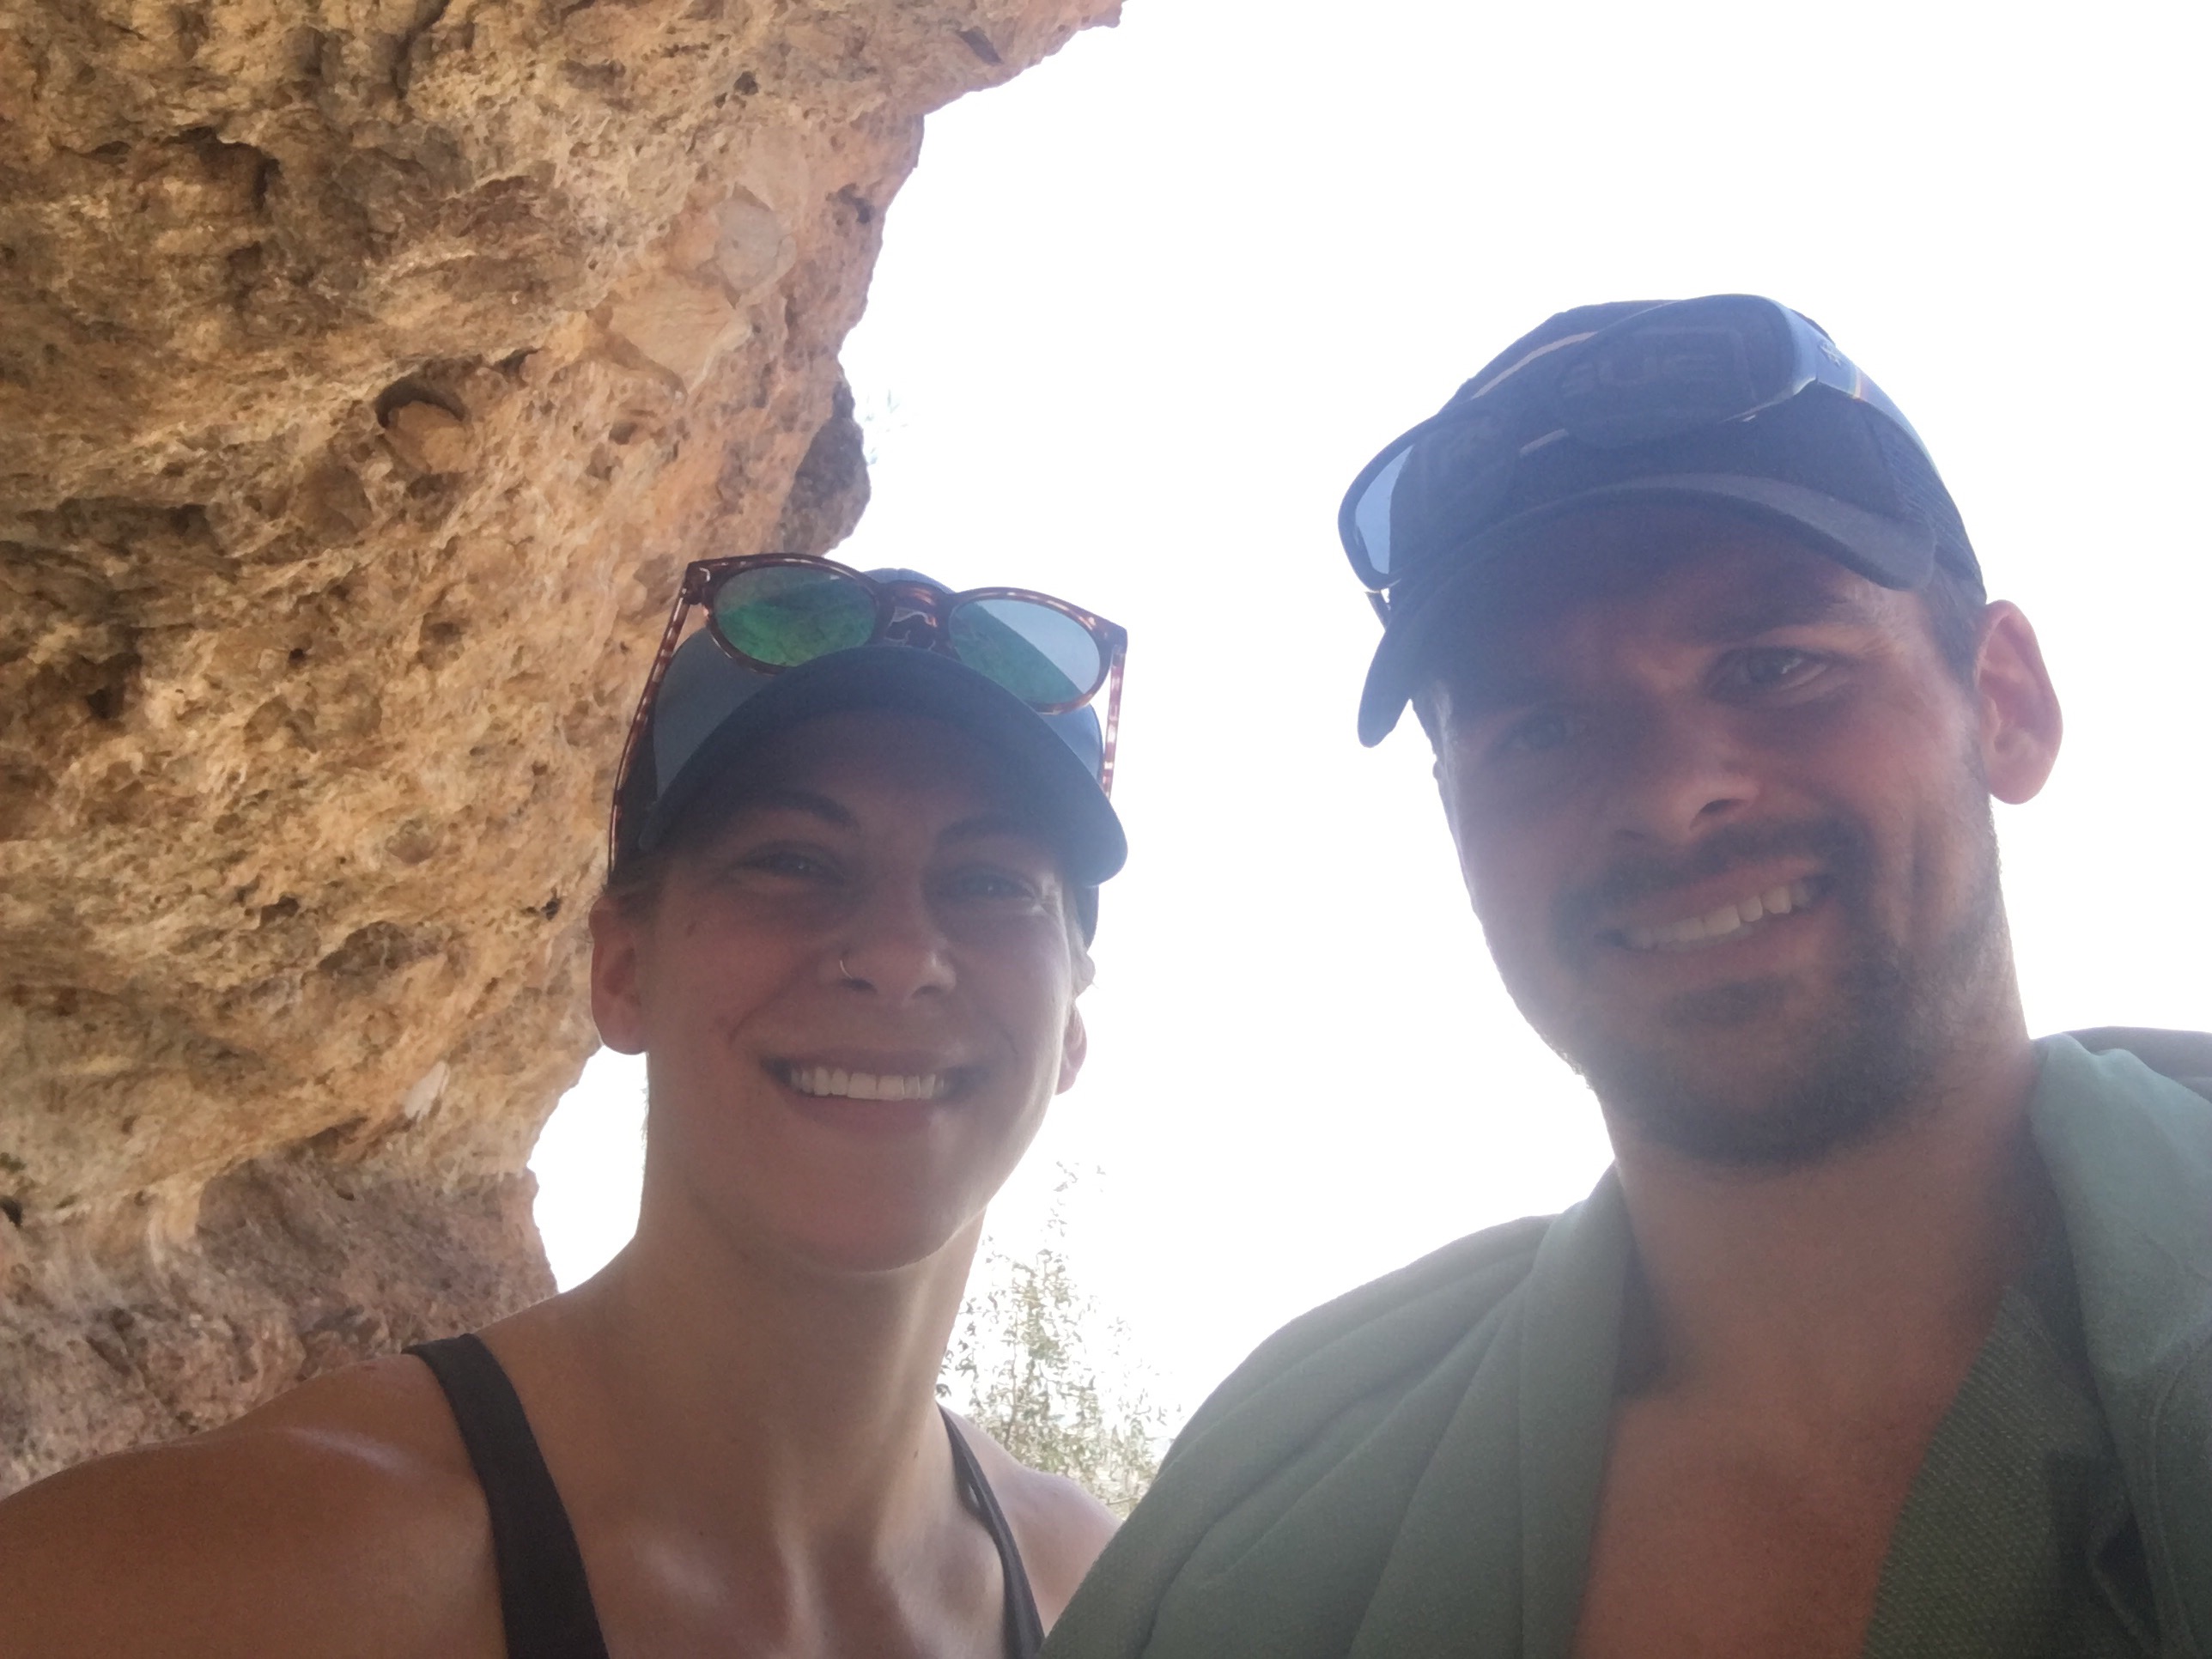 Hiking to the Wind Cave in Arizona